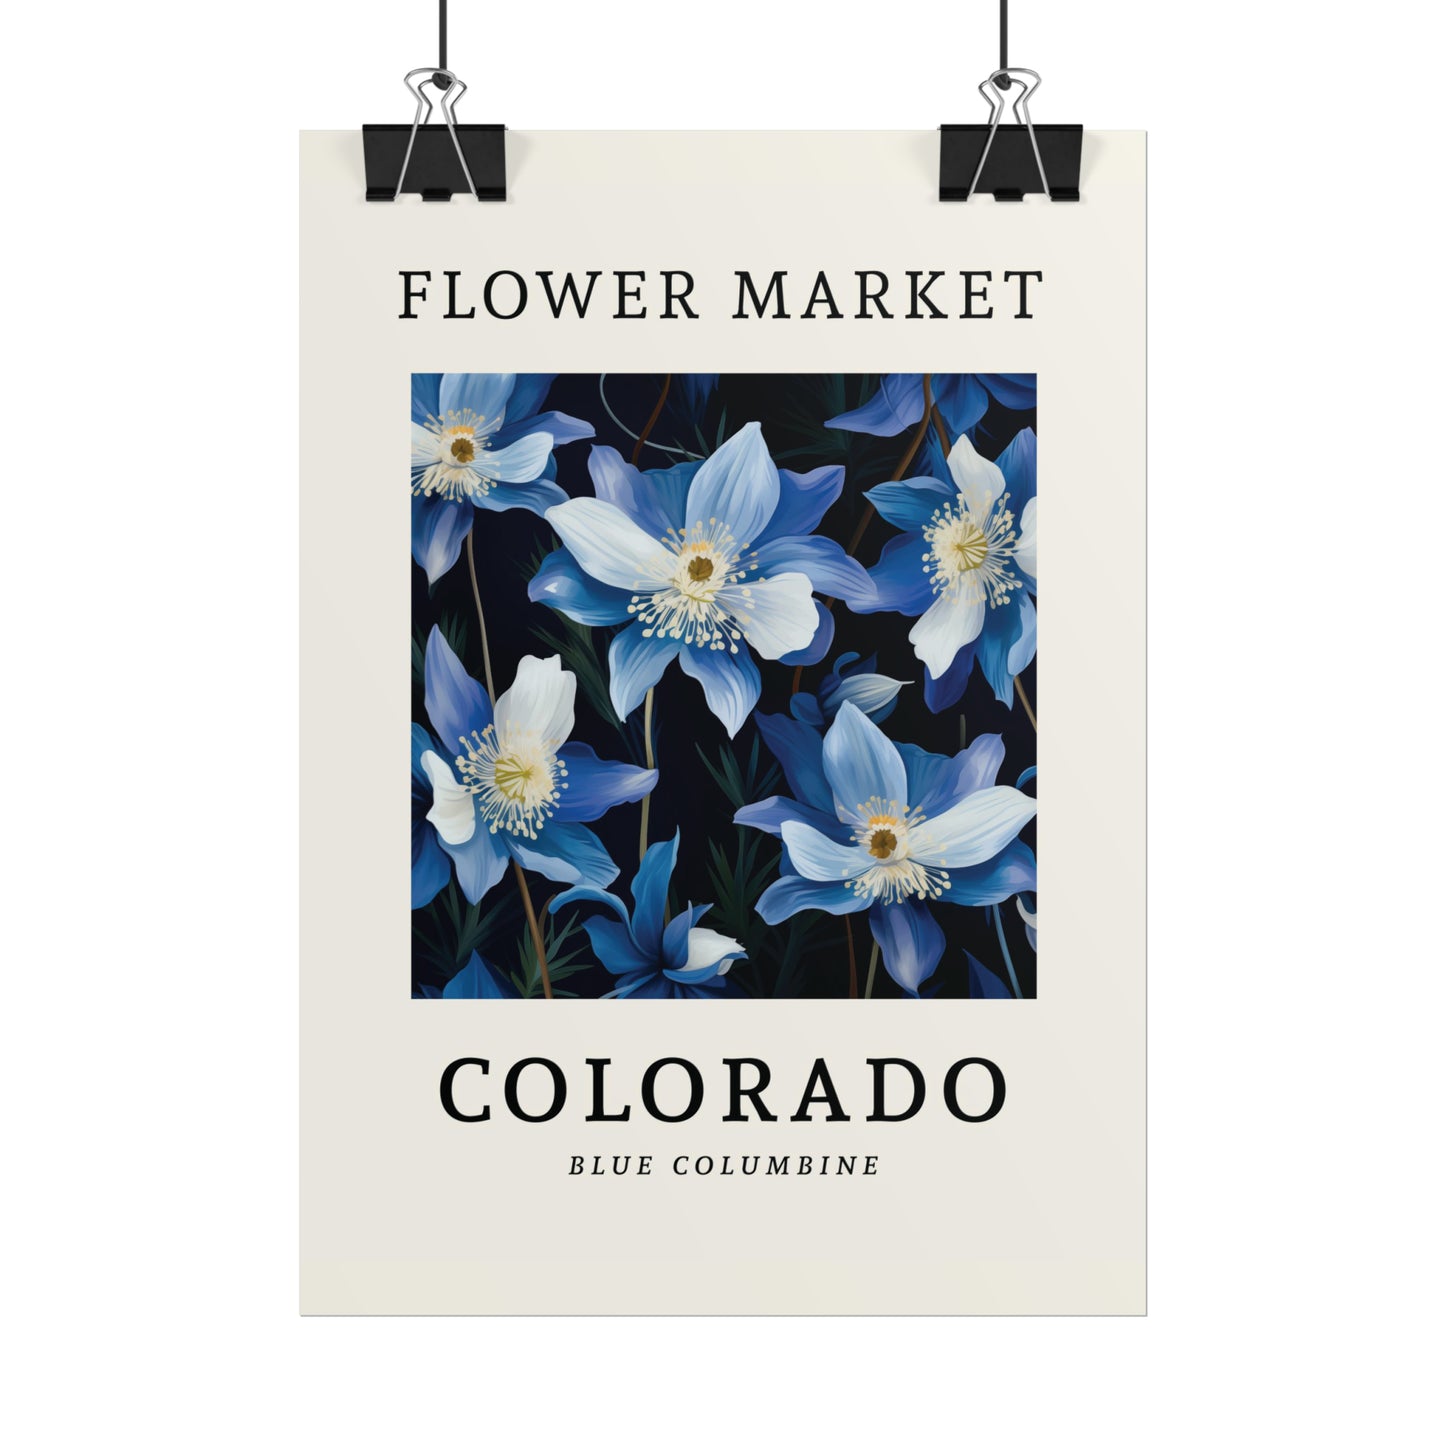 COLORADO FLOWER MARKET Poster Colorado Blue Columbine Flower Blooms Print